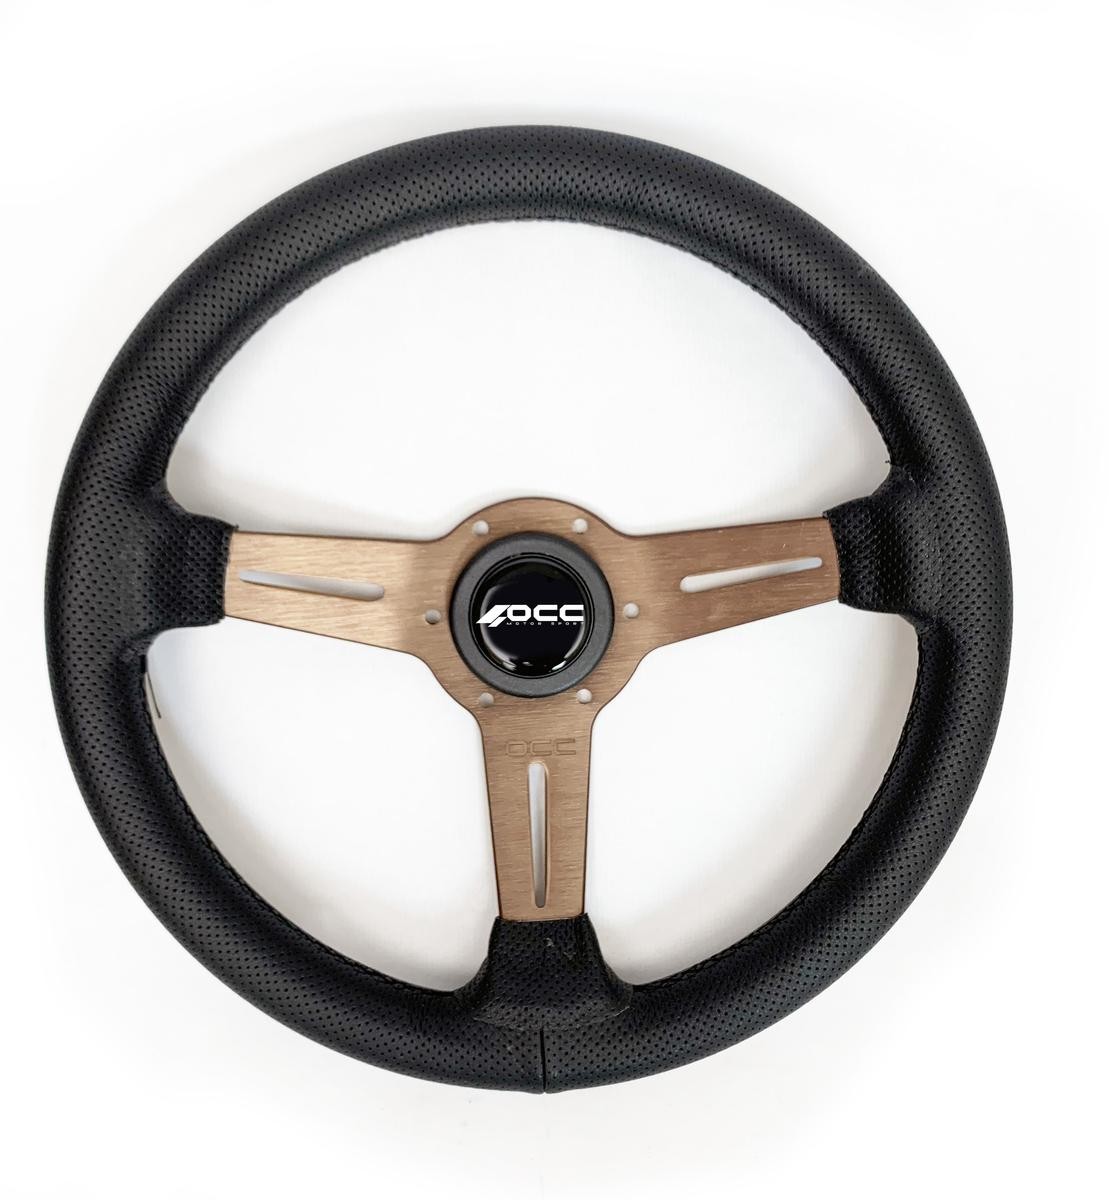 Mitsubishi Sports steering wheel Occ Motorsport OCCVOL009 at a good price